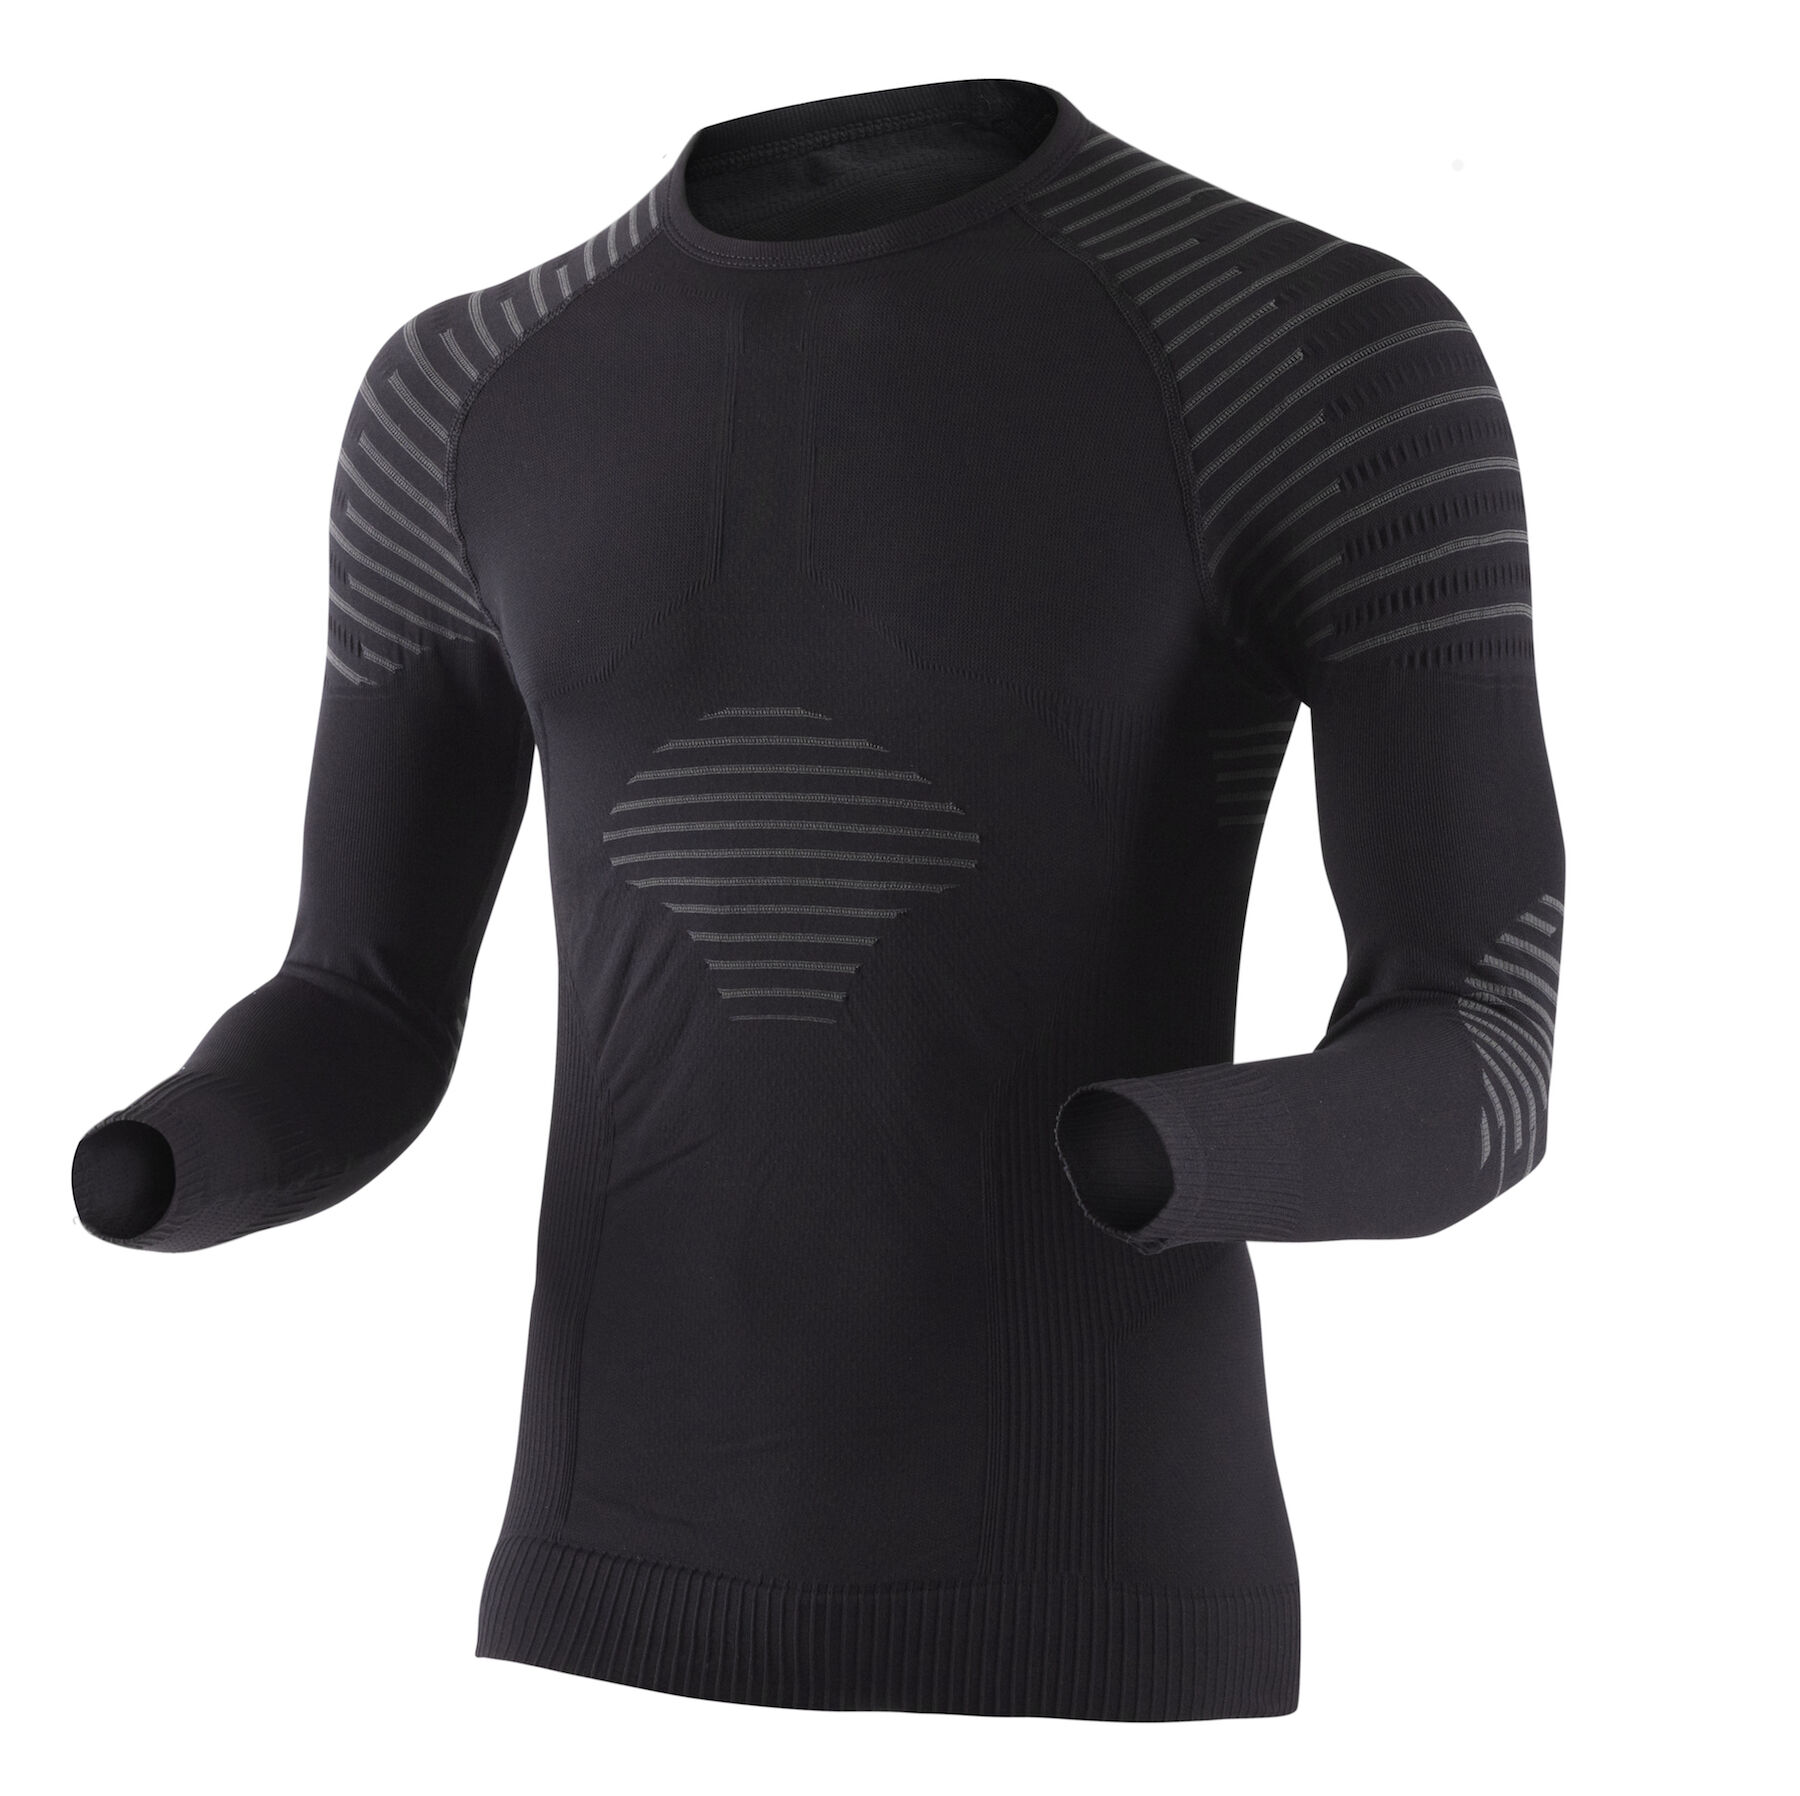 X-Bionic - Invent Shirt long sleeves - Maglietta termica - Uomo